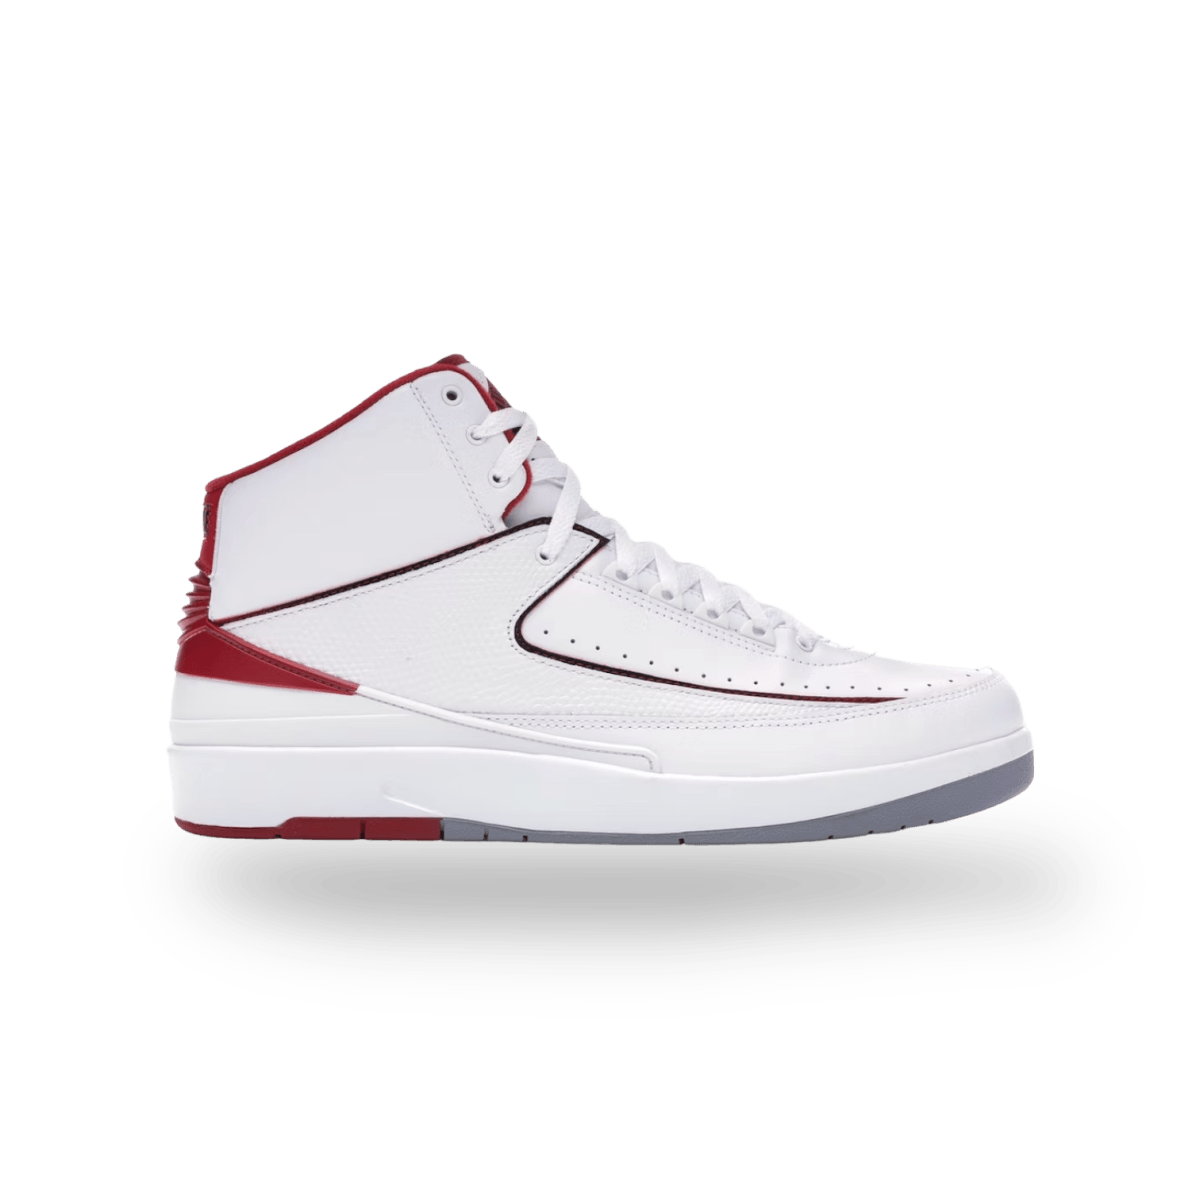 Jordan 2 Retro White Red (2014) - Gently Enjoyed (Used) Men 10.5 - No Box - High Sneaker - Jawns on Fire Sneakers & Streetwear